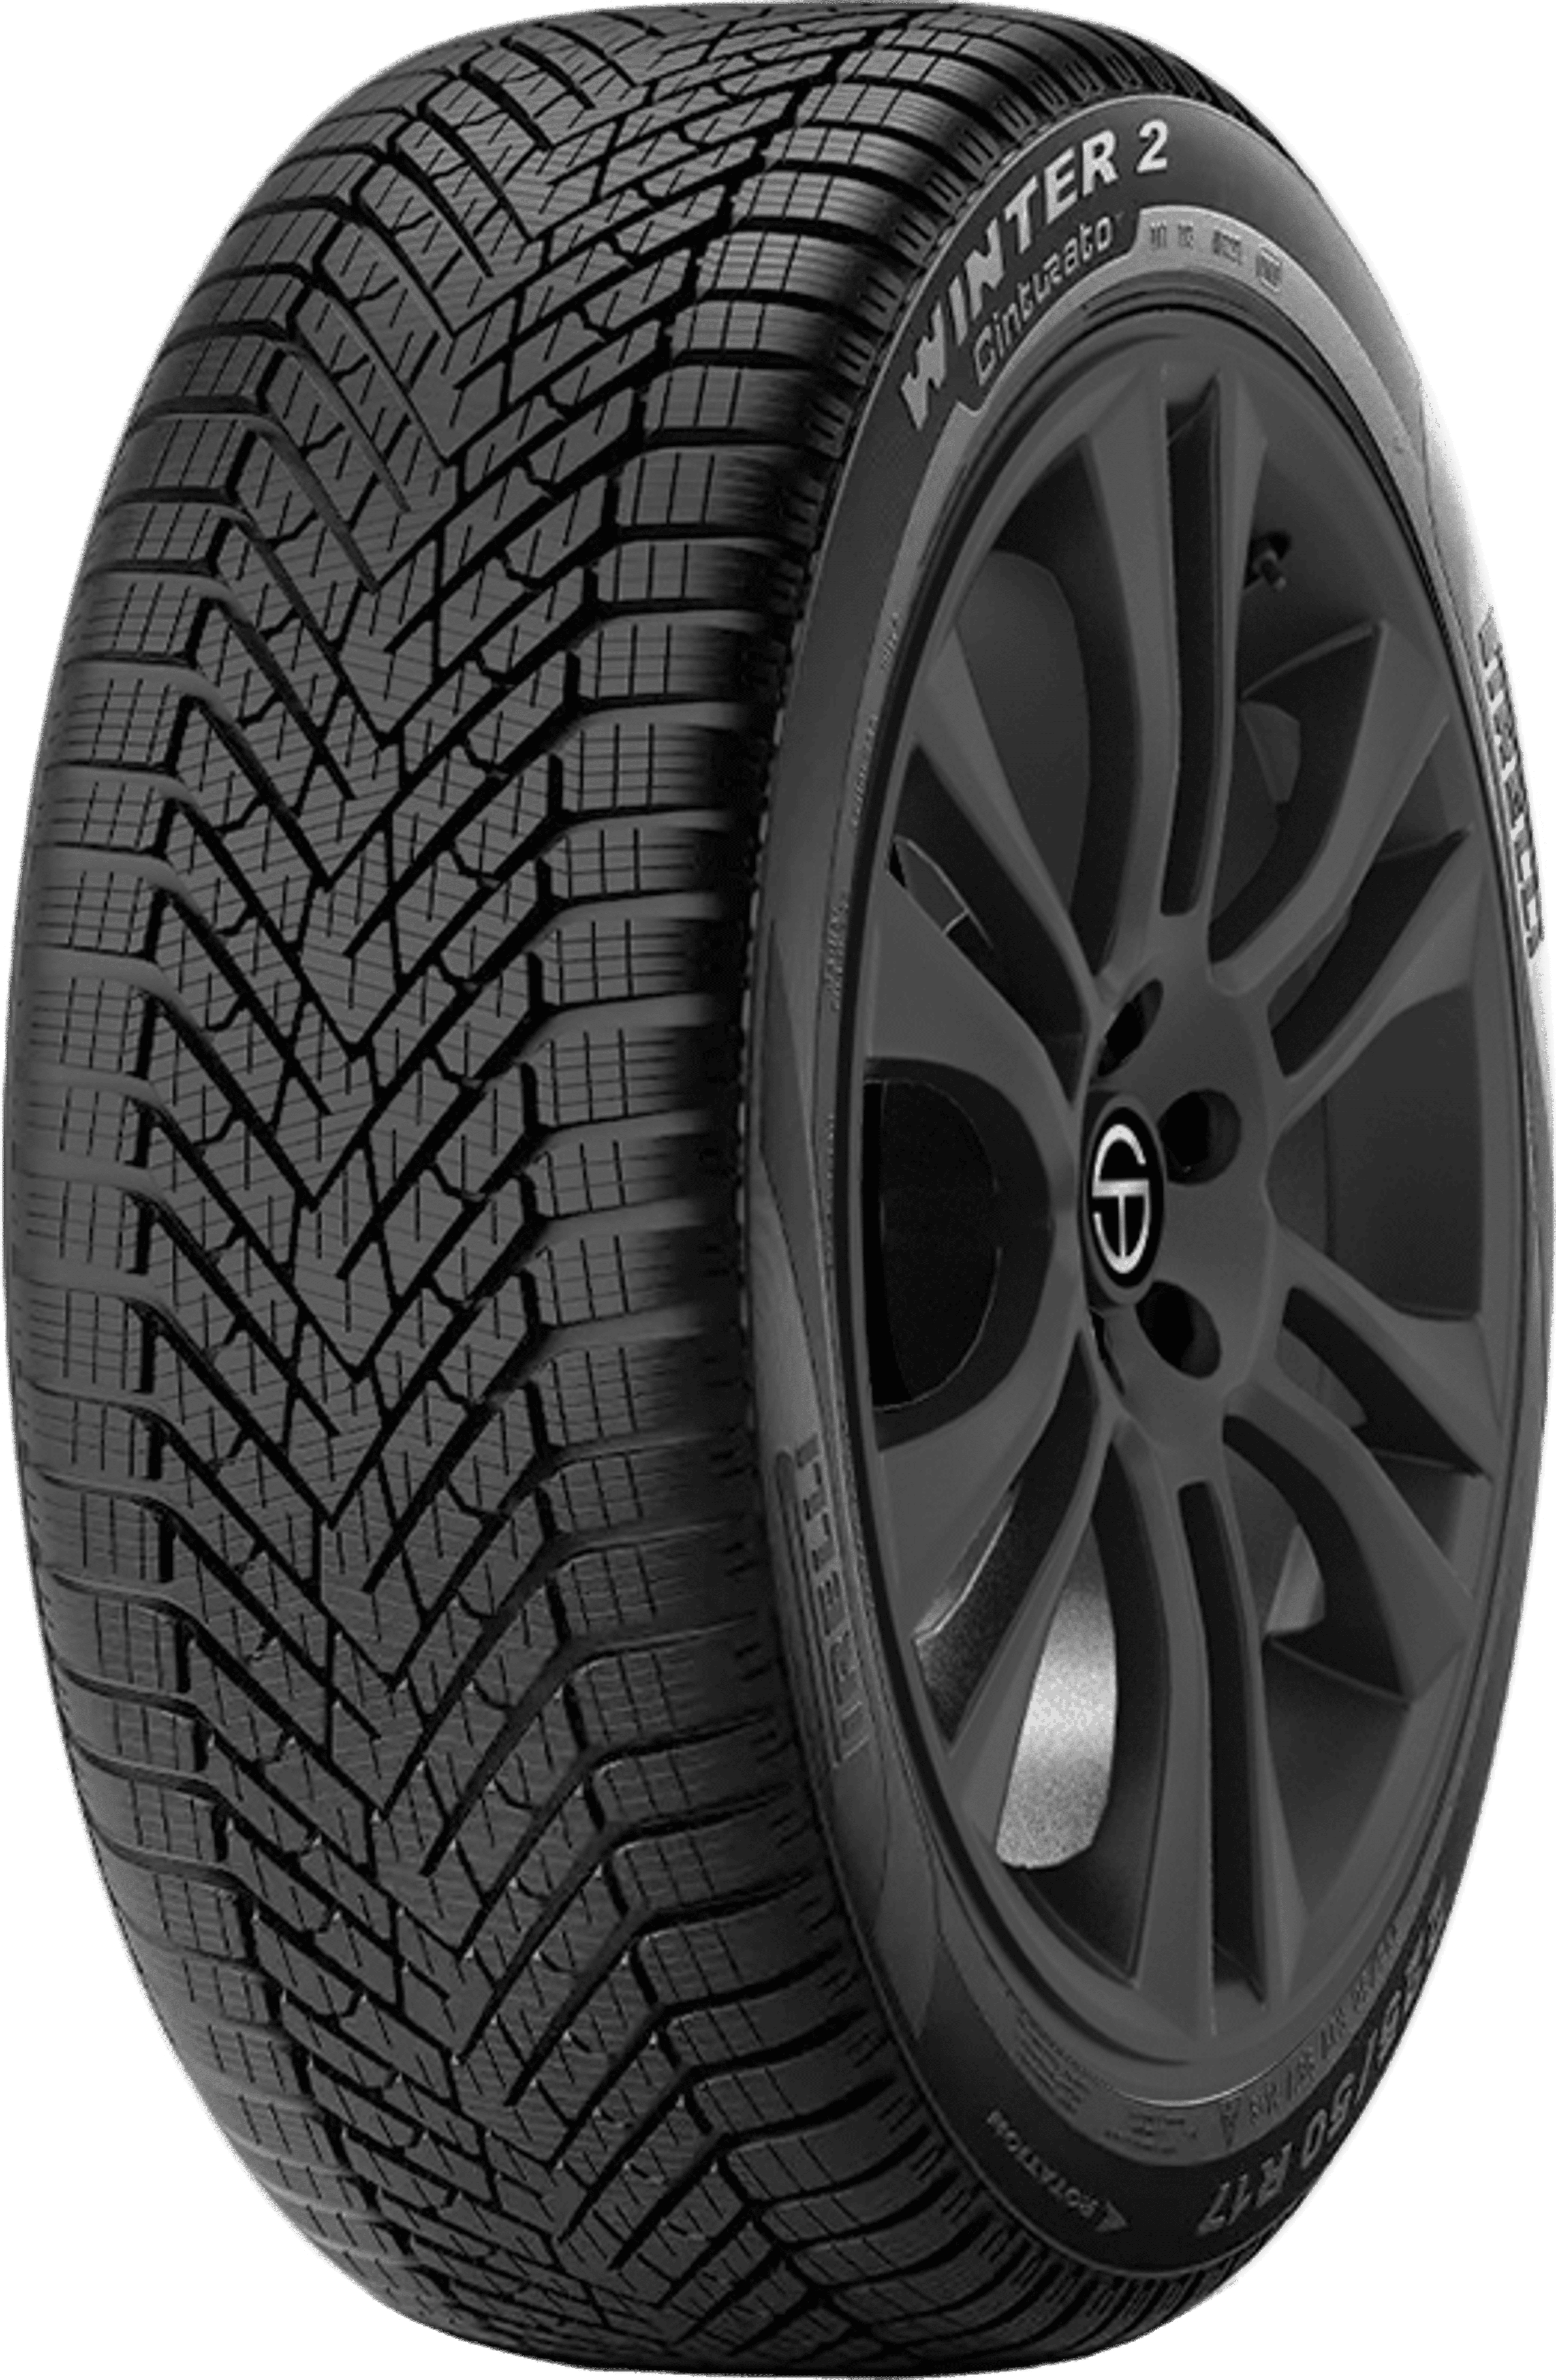 Buy Tires Cinturato Winter 2 Pirelli SimpleTire Online |